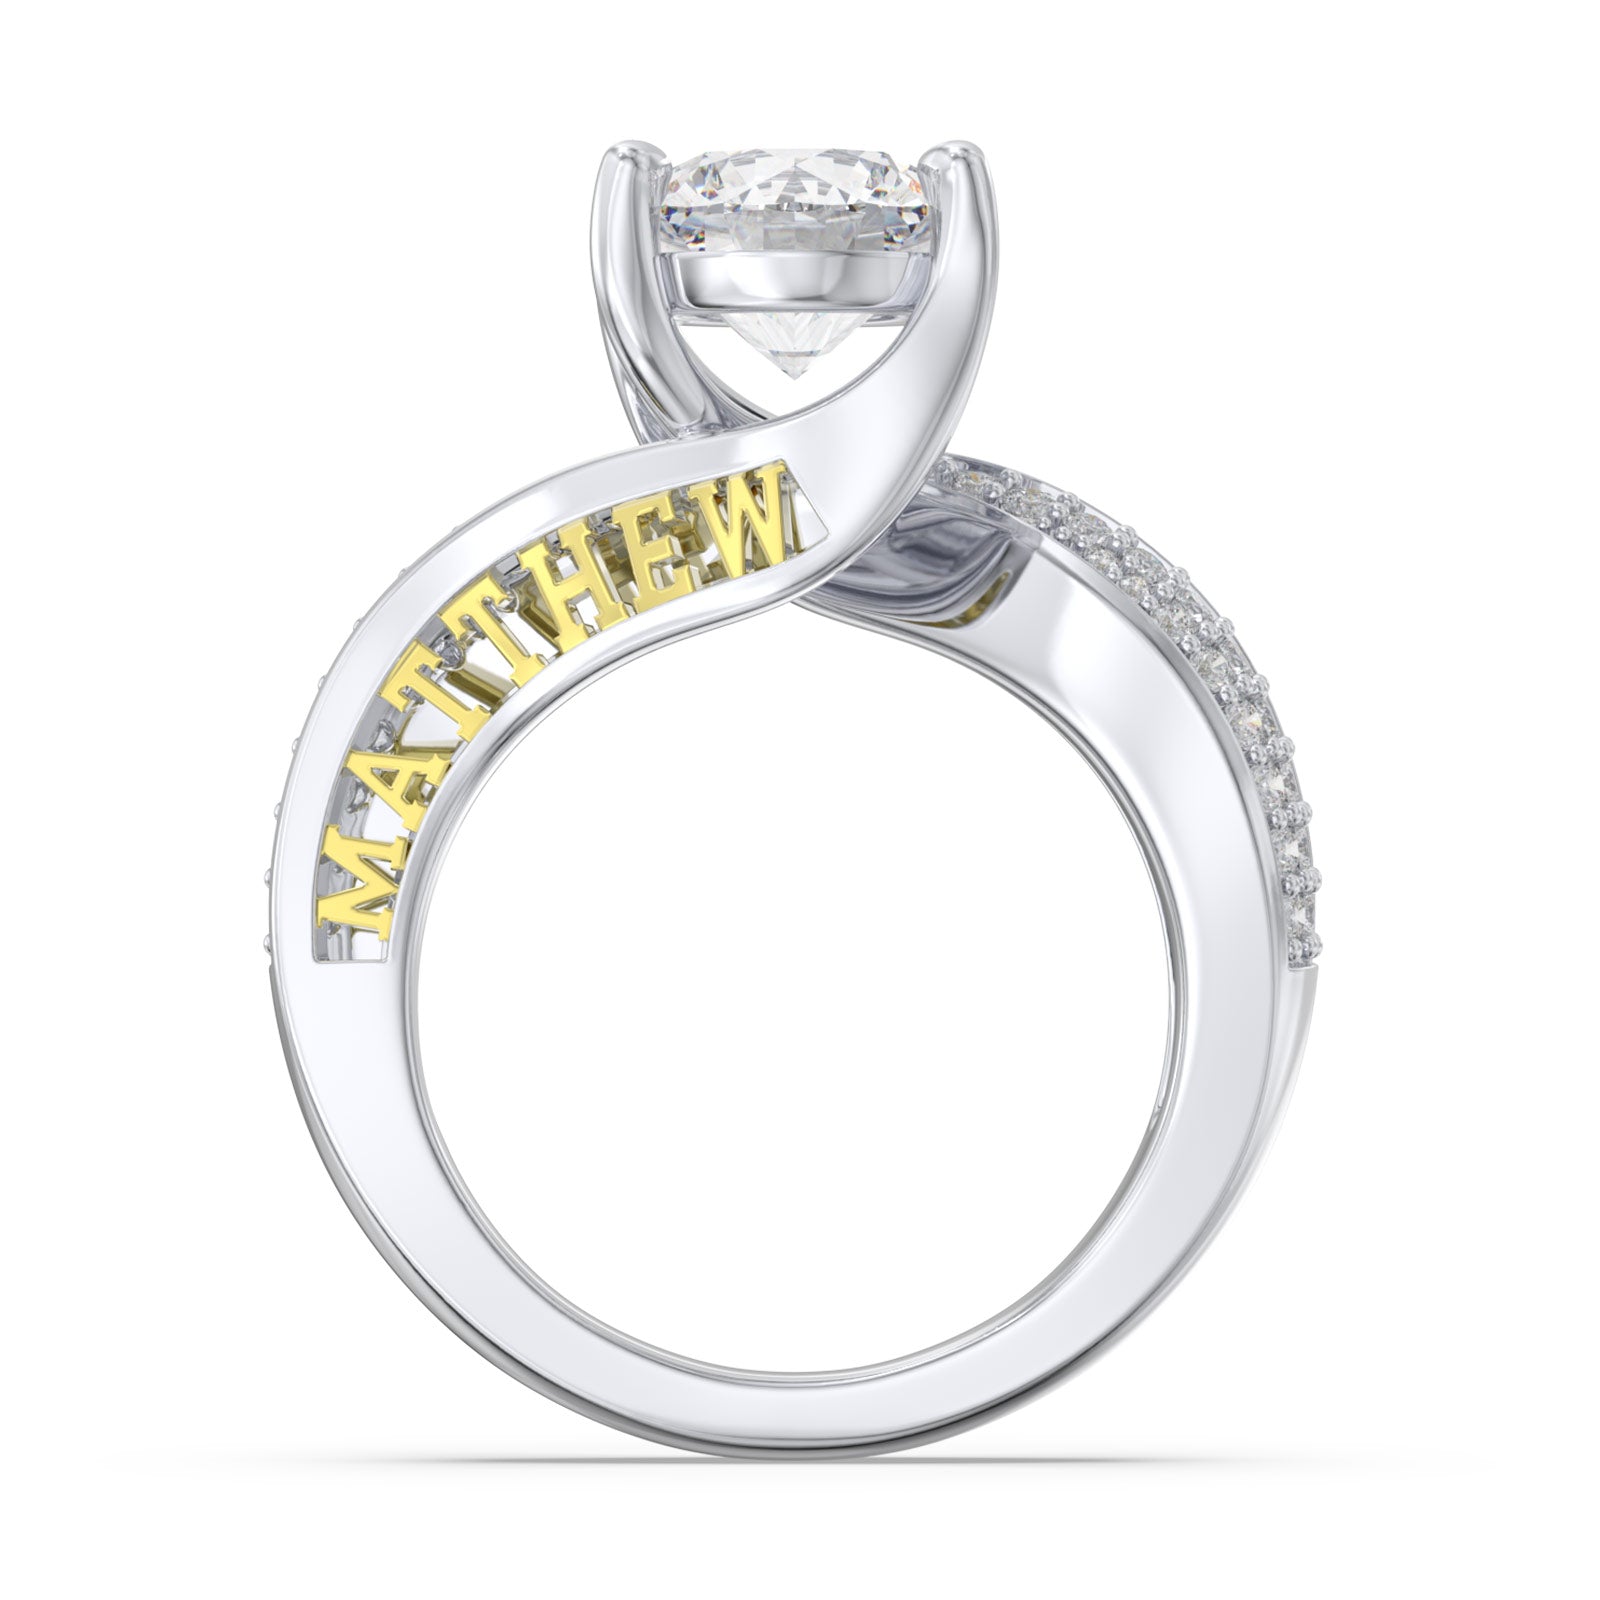 ThinkEngraved Womens Wedding Rings Personalized Wedding Ring 2.1 Karat Moisannite Solitaire 14k White Gold Finish